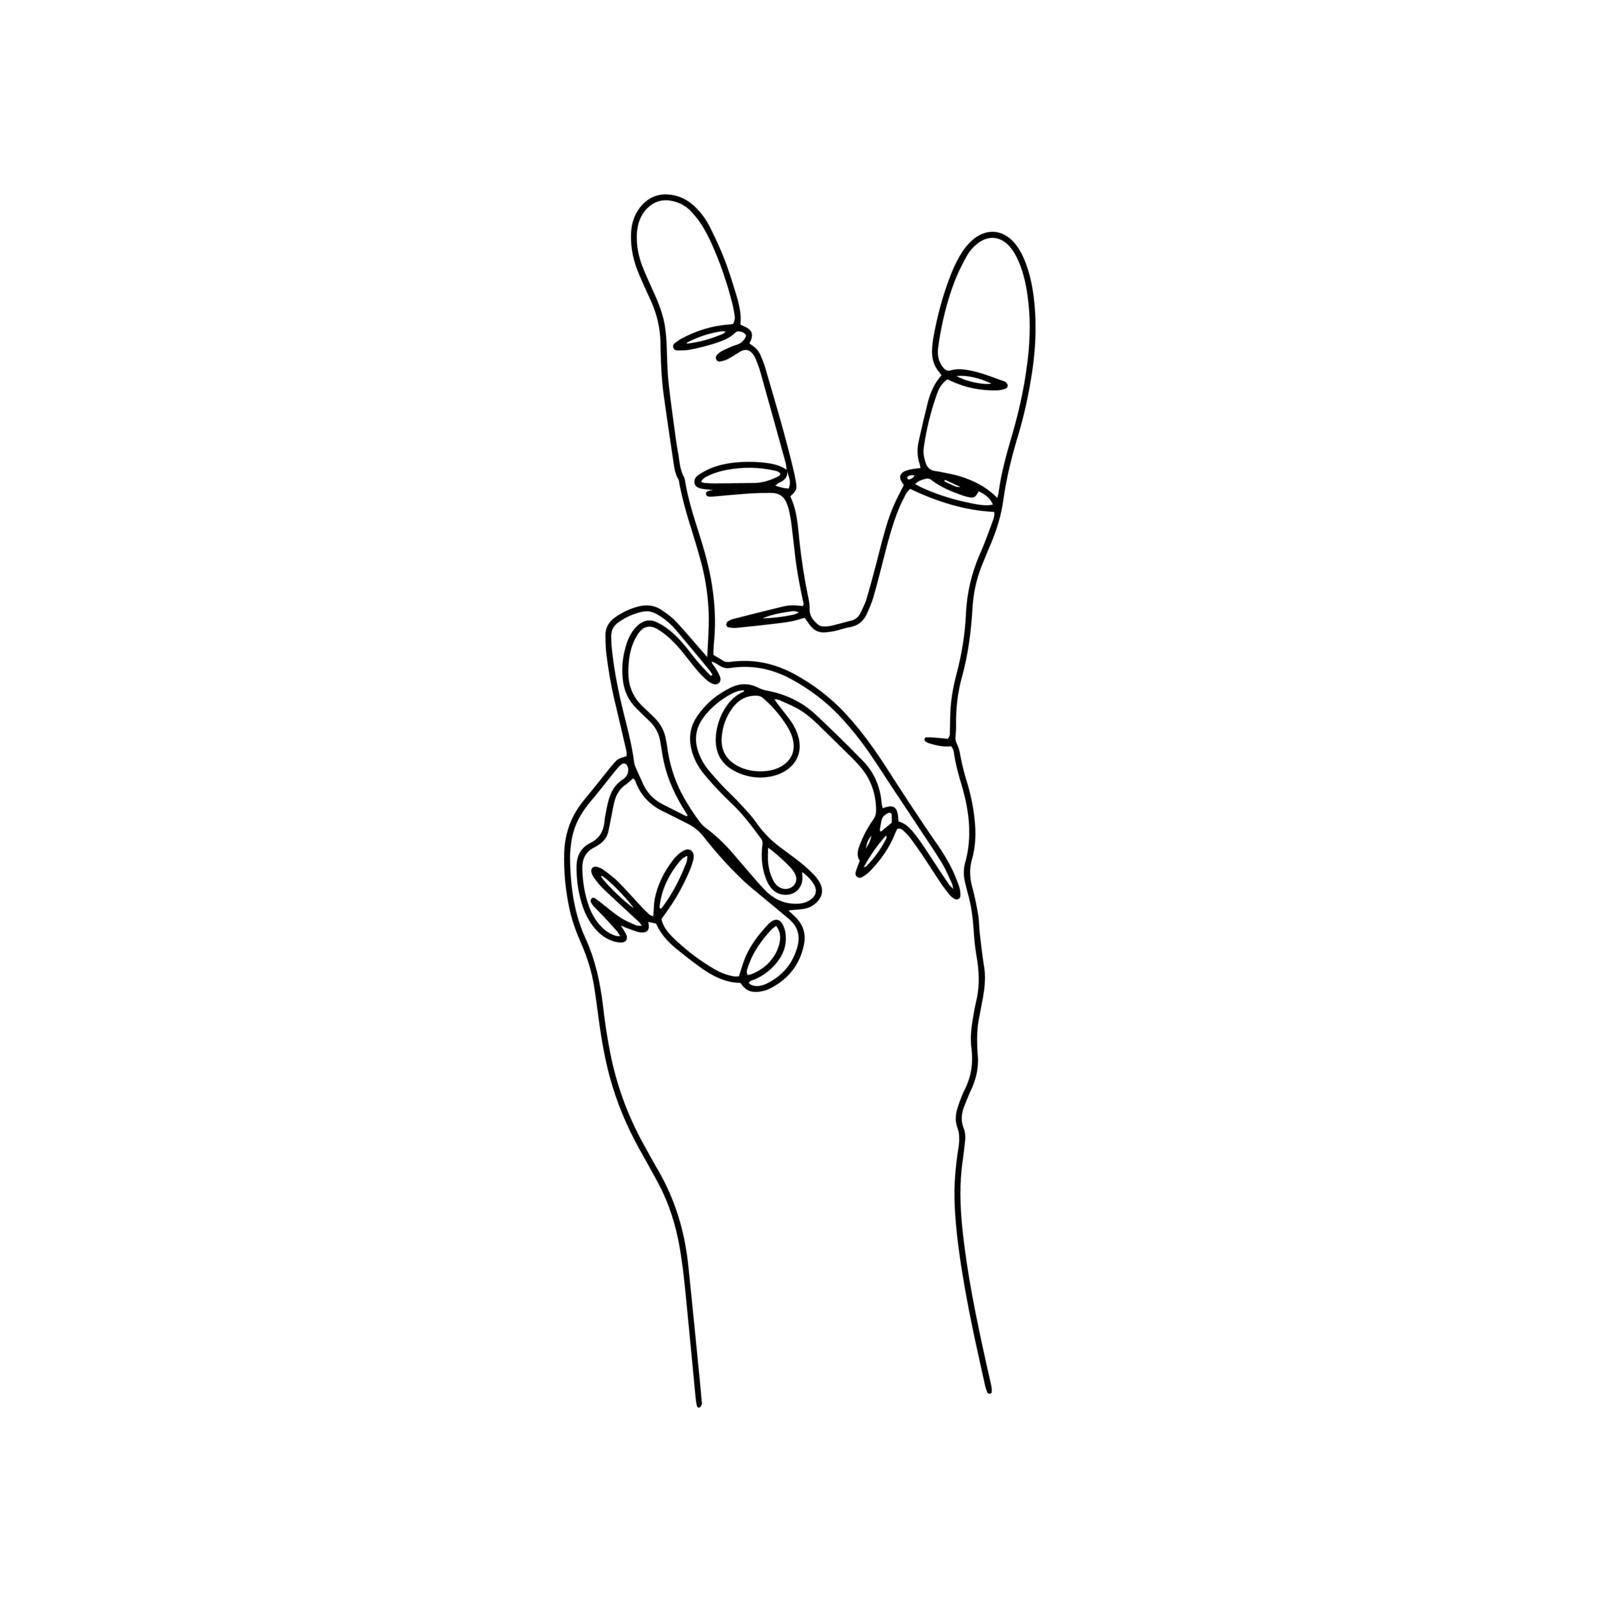 Hand gesture symbol of victory line art vector by TassiaK